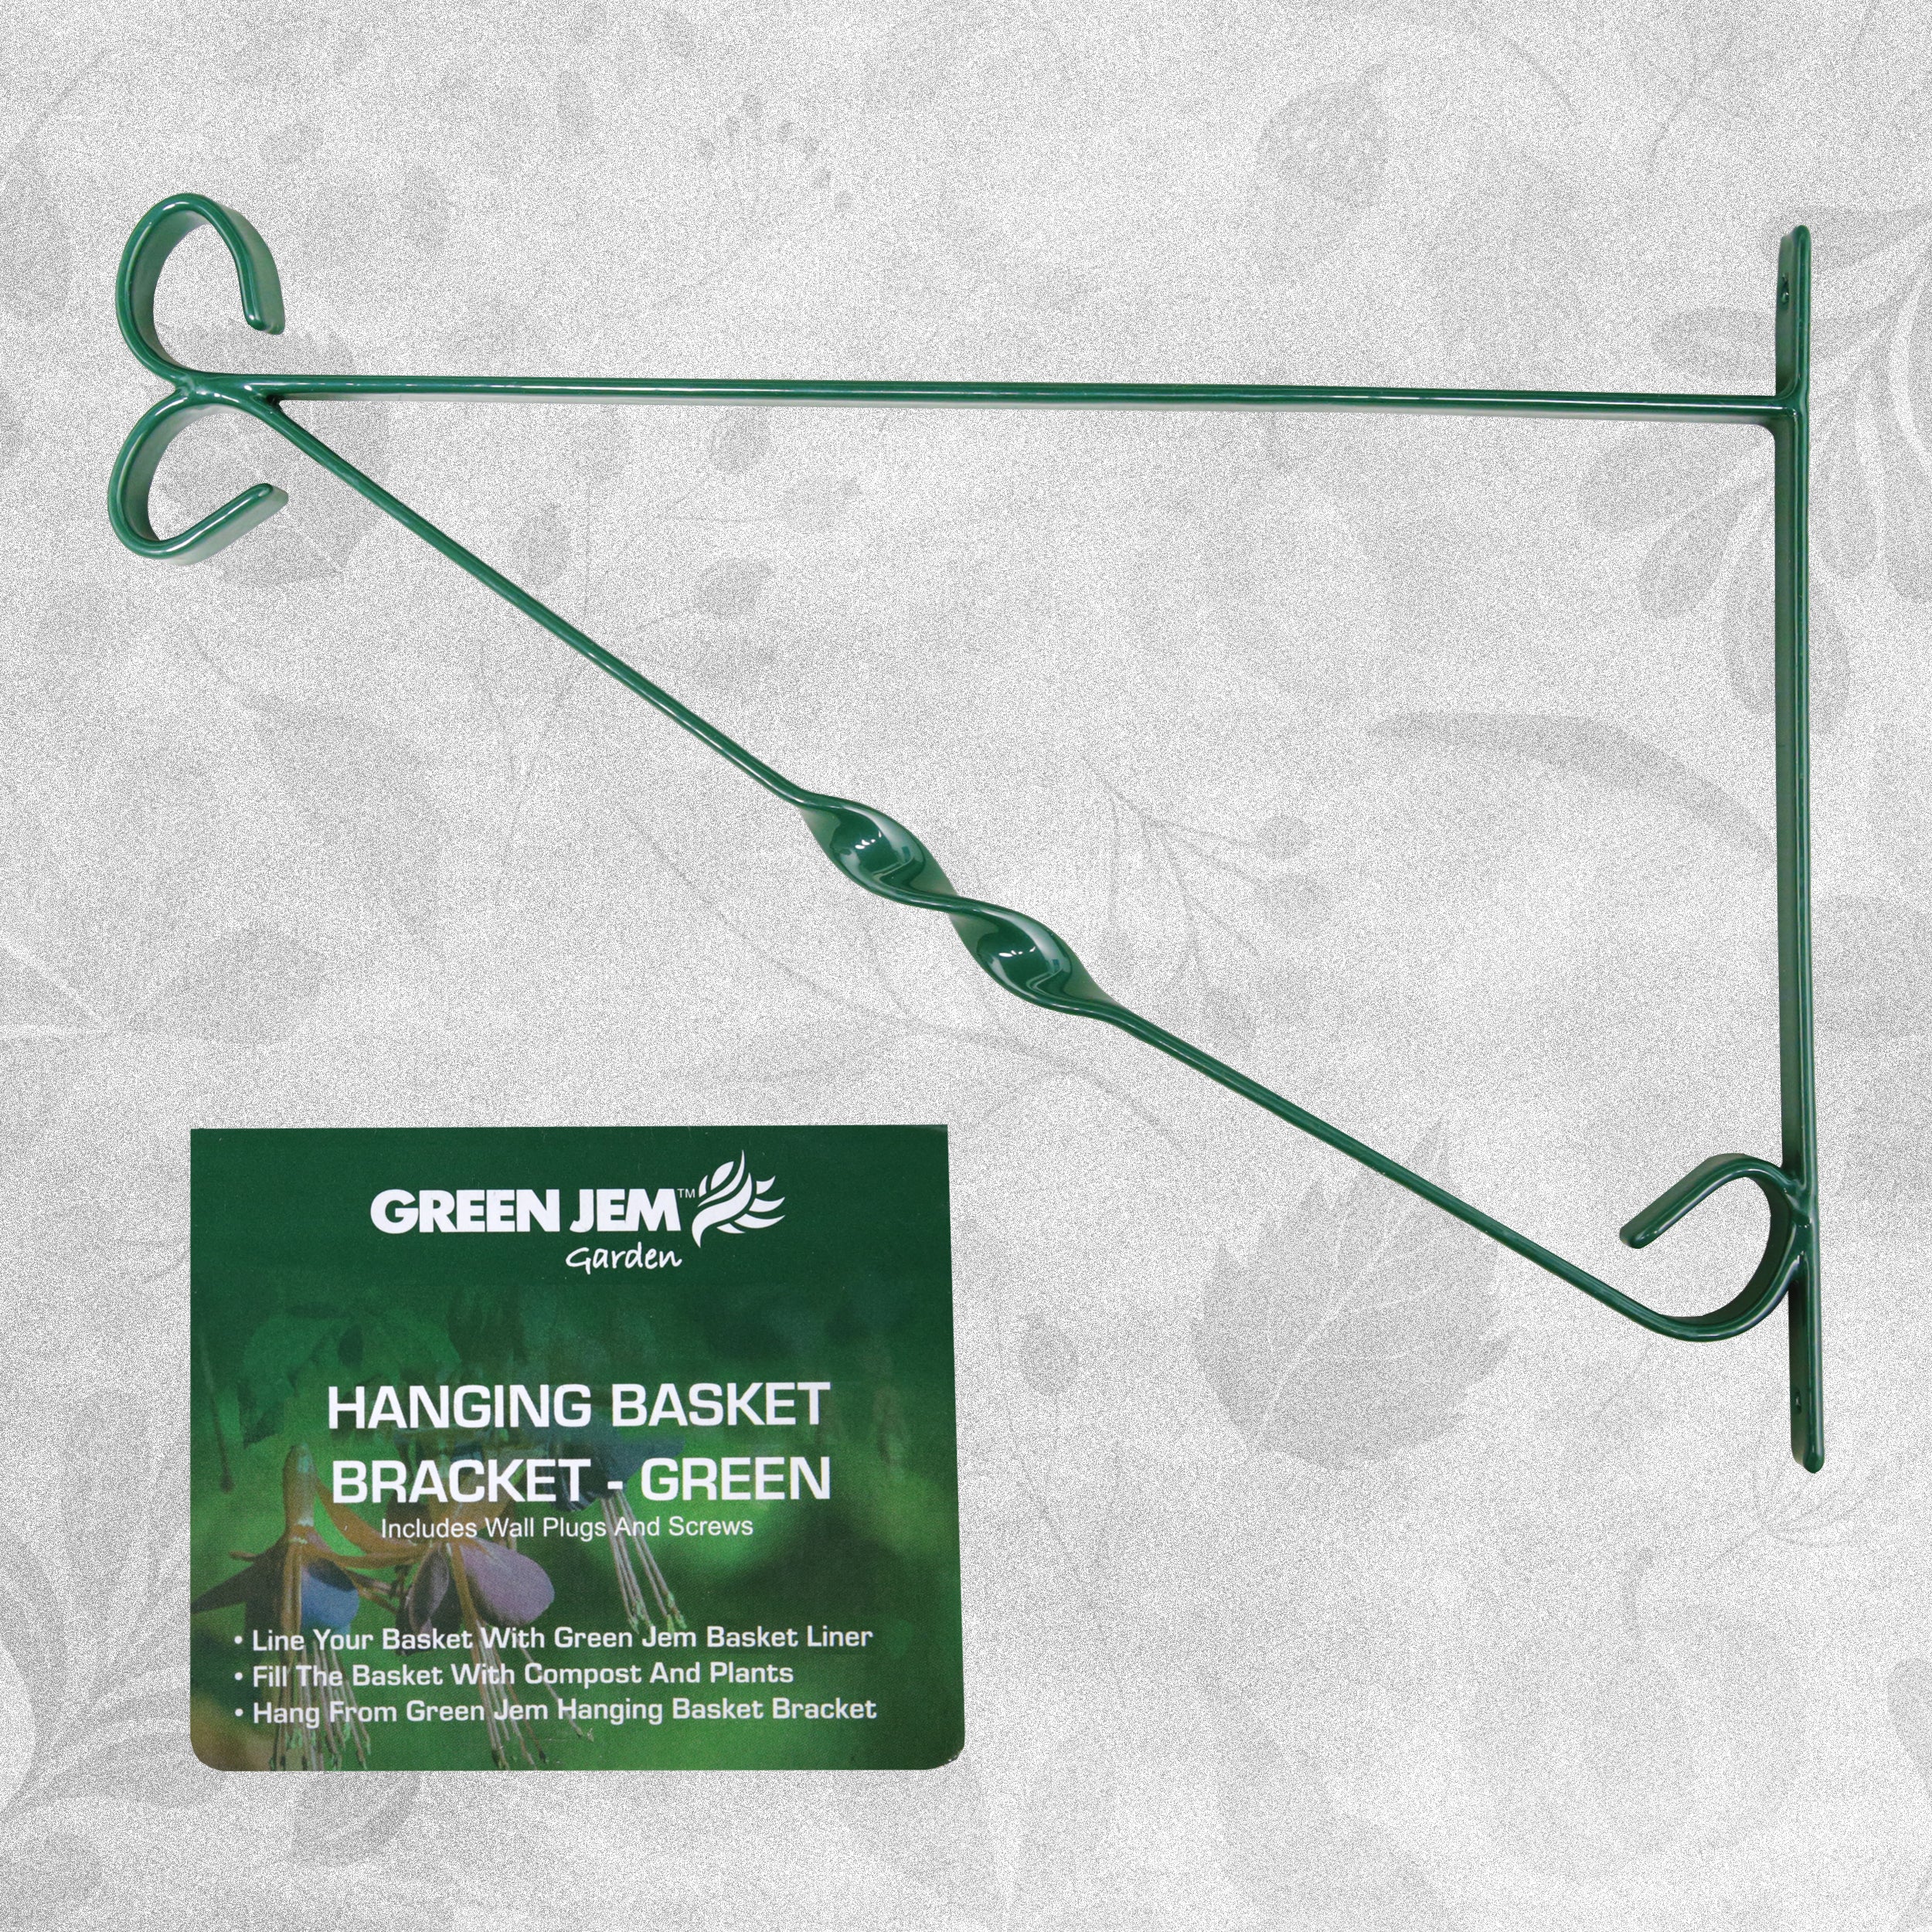 Green Jem Garden Wall Hanging Basket Bracket - Green - 30 cm (12")